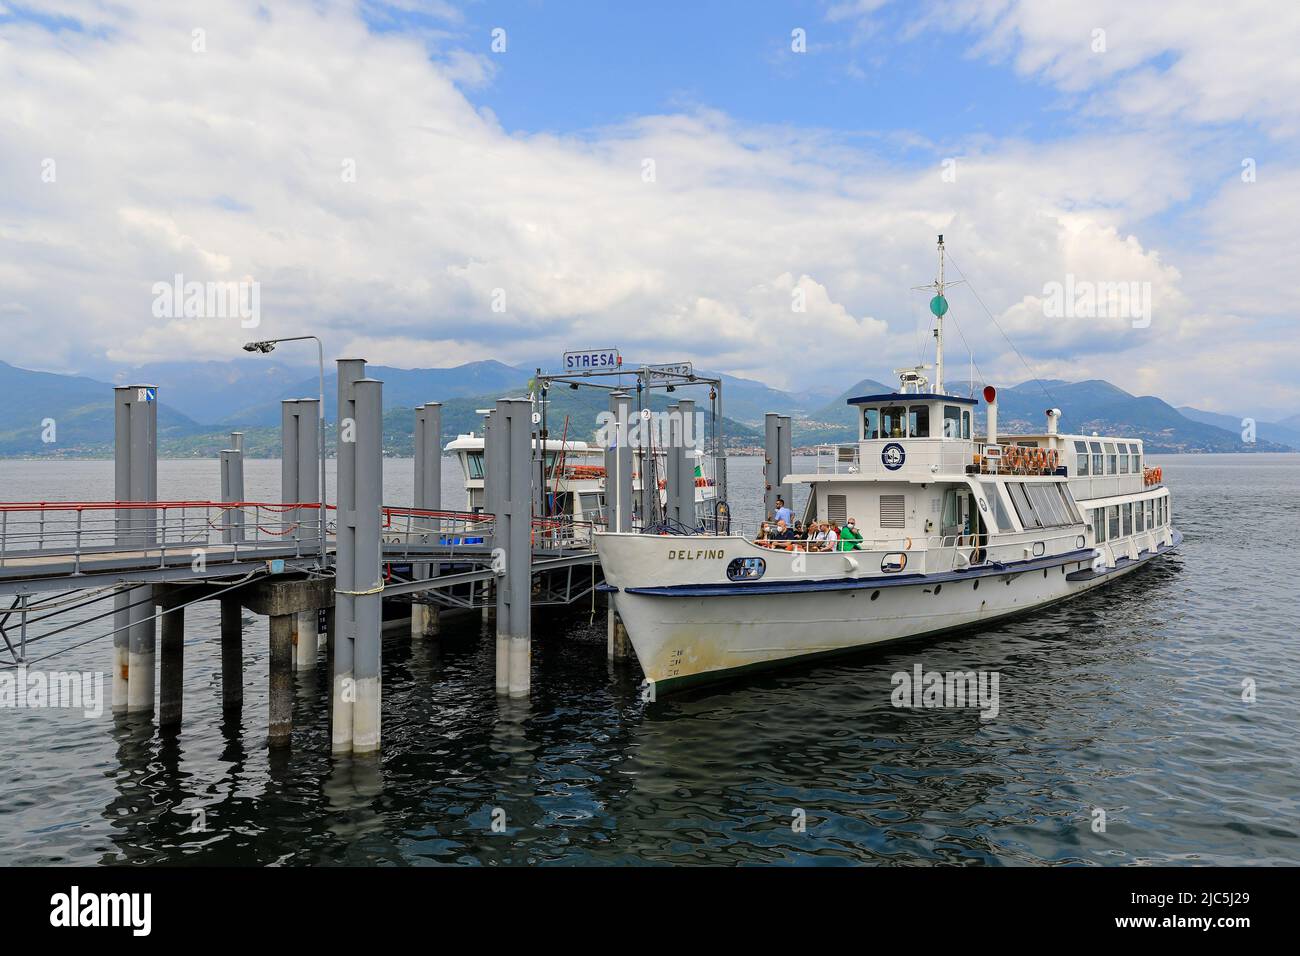 El embarcadero de Stresa, Lago Maggiore, Italia Foto de stock